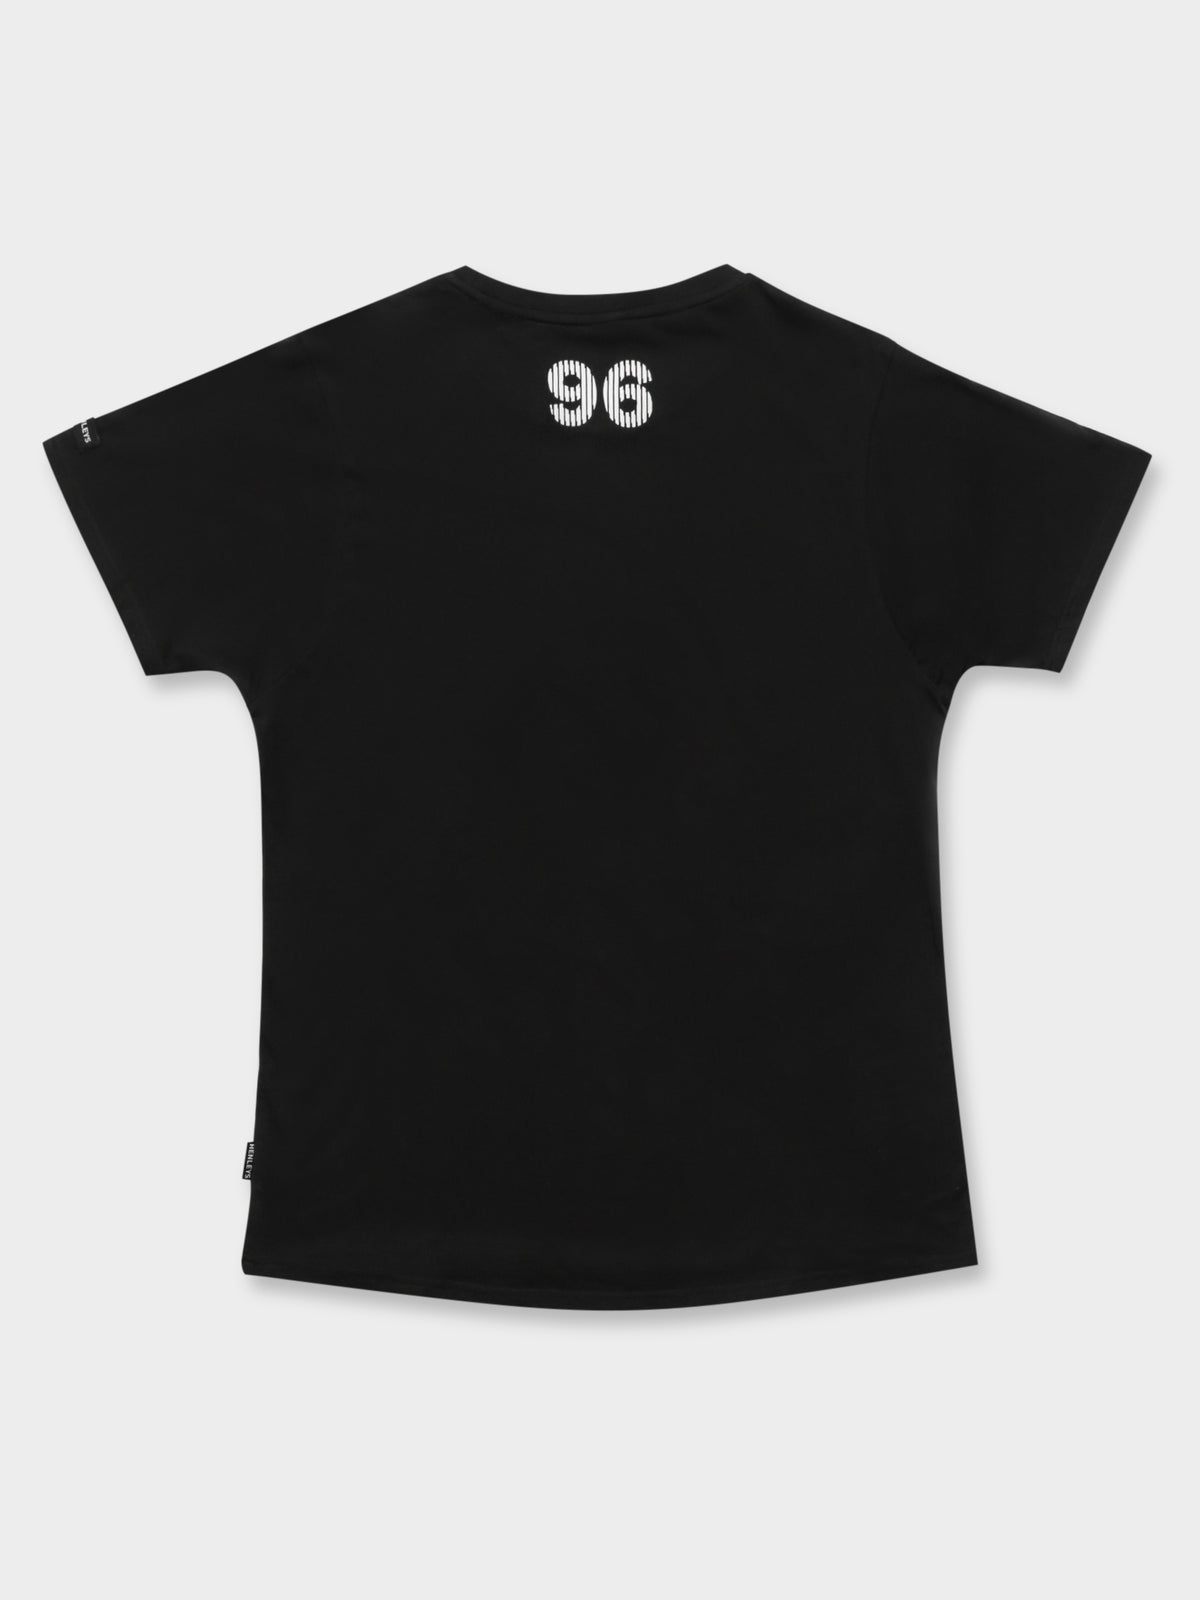 Reeves T-Shirt in Black